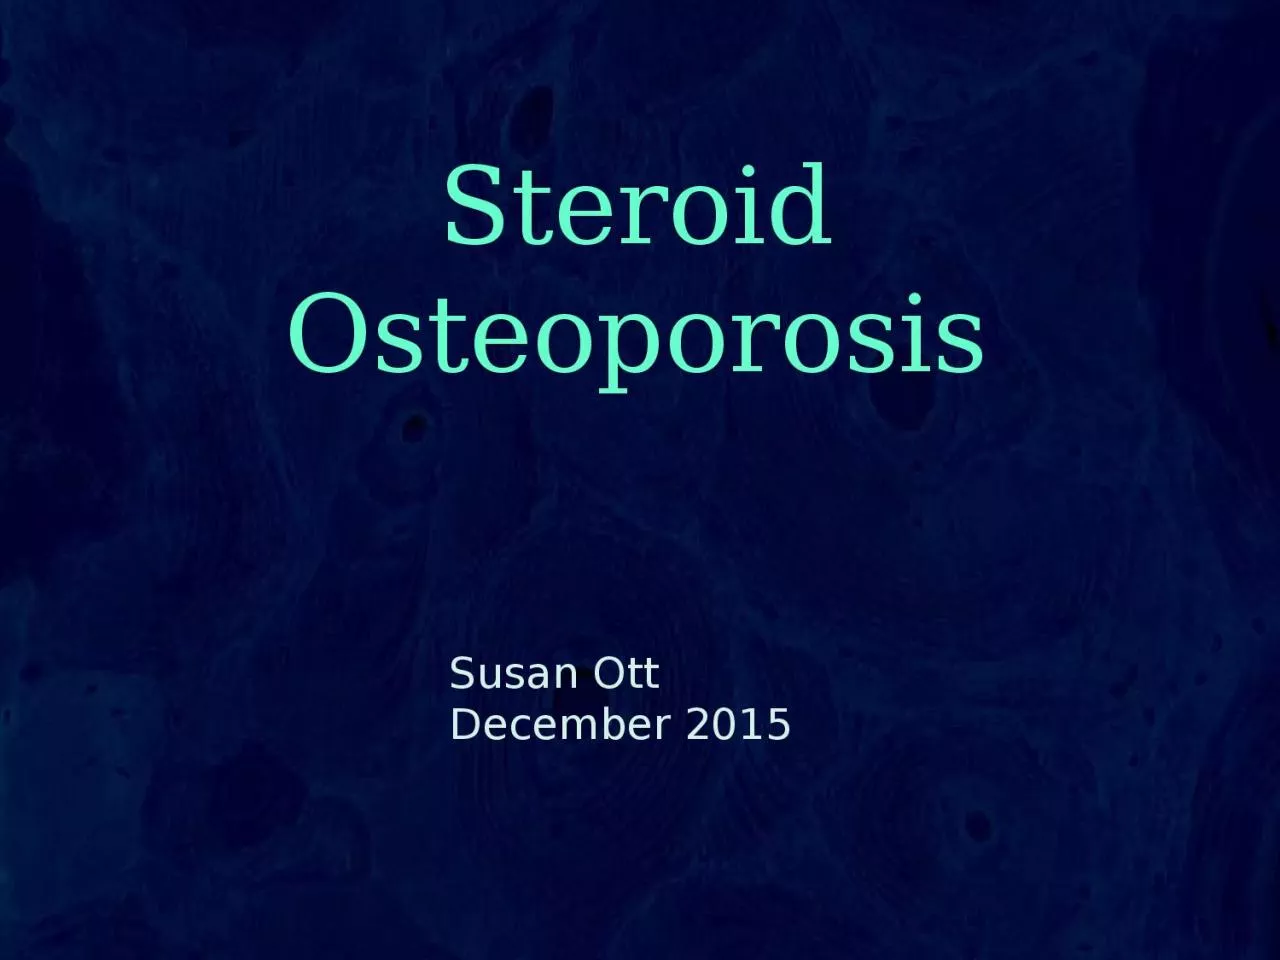 Steroid Osteoporosis Susan Ott